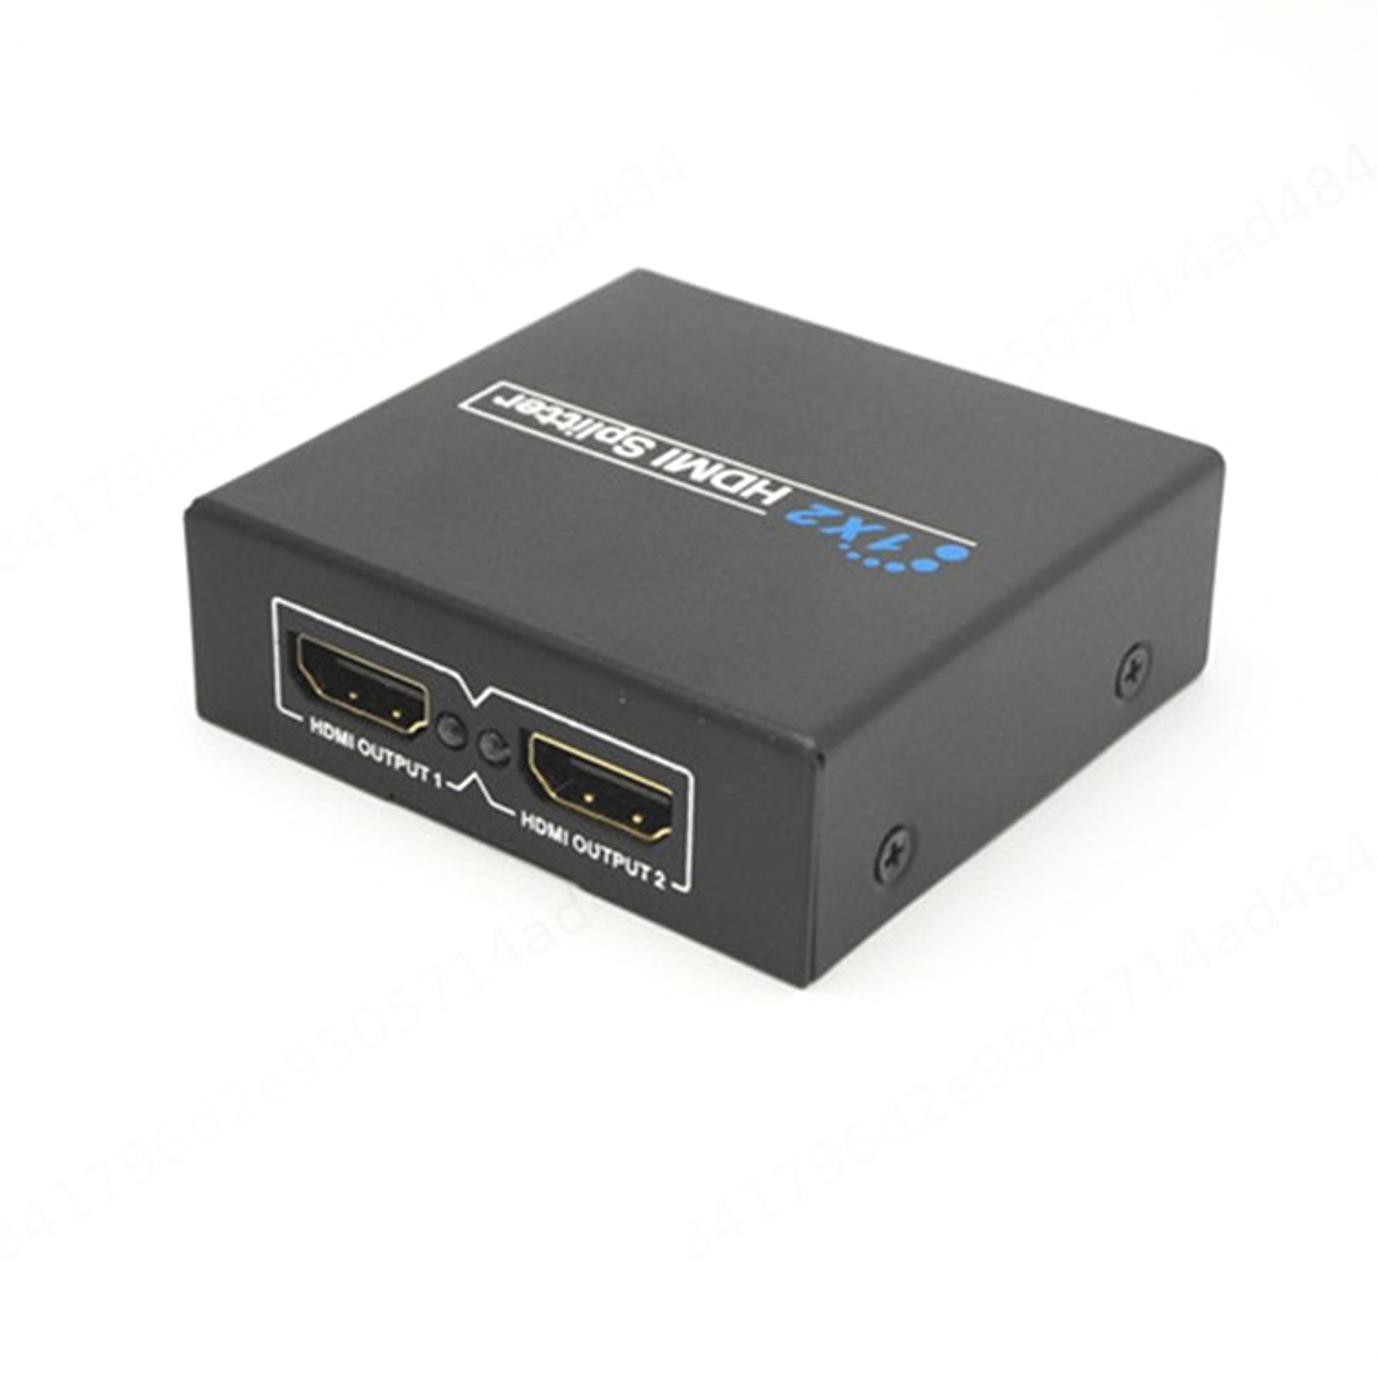 1x2 conmutador HDMI 1x2 divisor HDMI puerto HDMI interruptor automático compatible con 3D Full HD1080P para pc HDTV DVD HDPS3|Cables HDMI|   - AliExpr